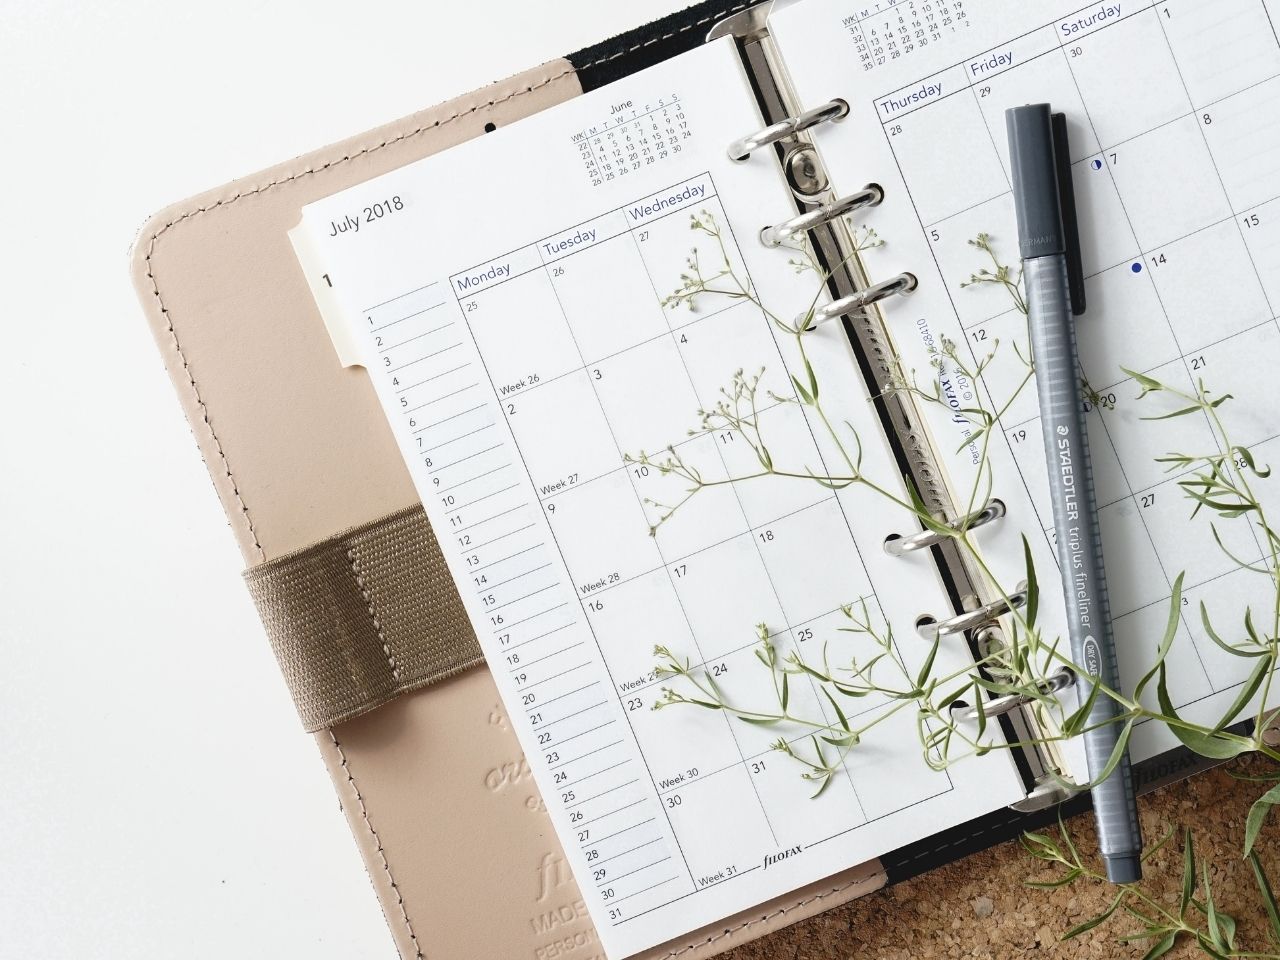 Calendar notebook with pencil